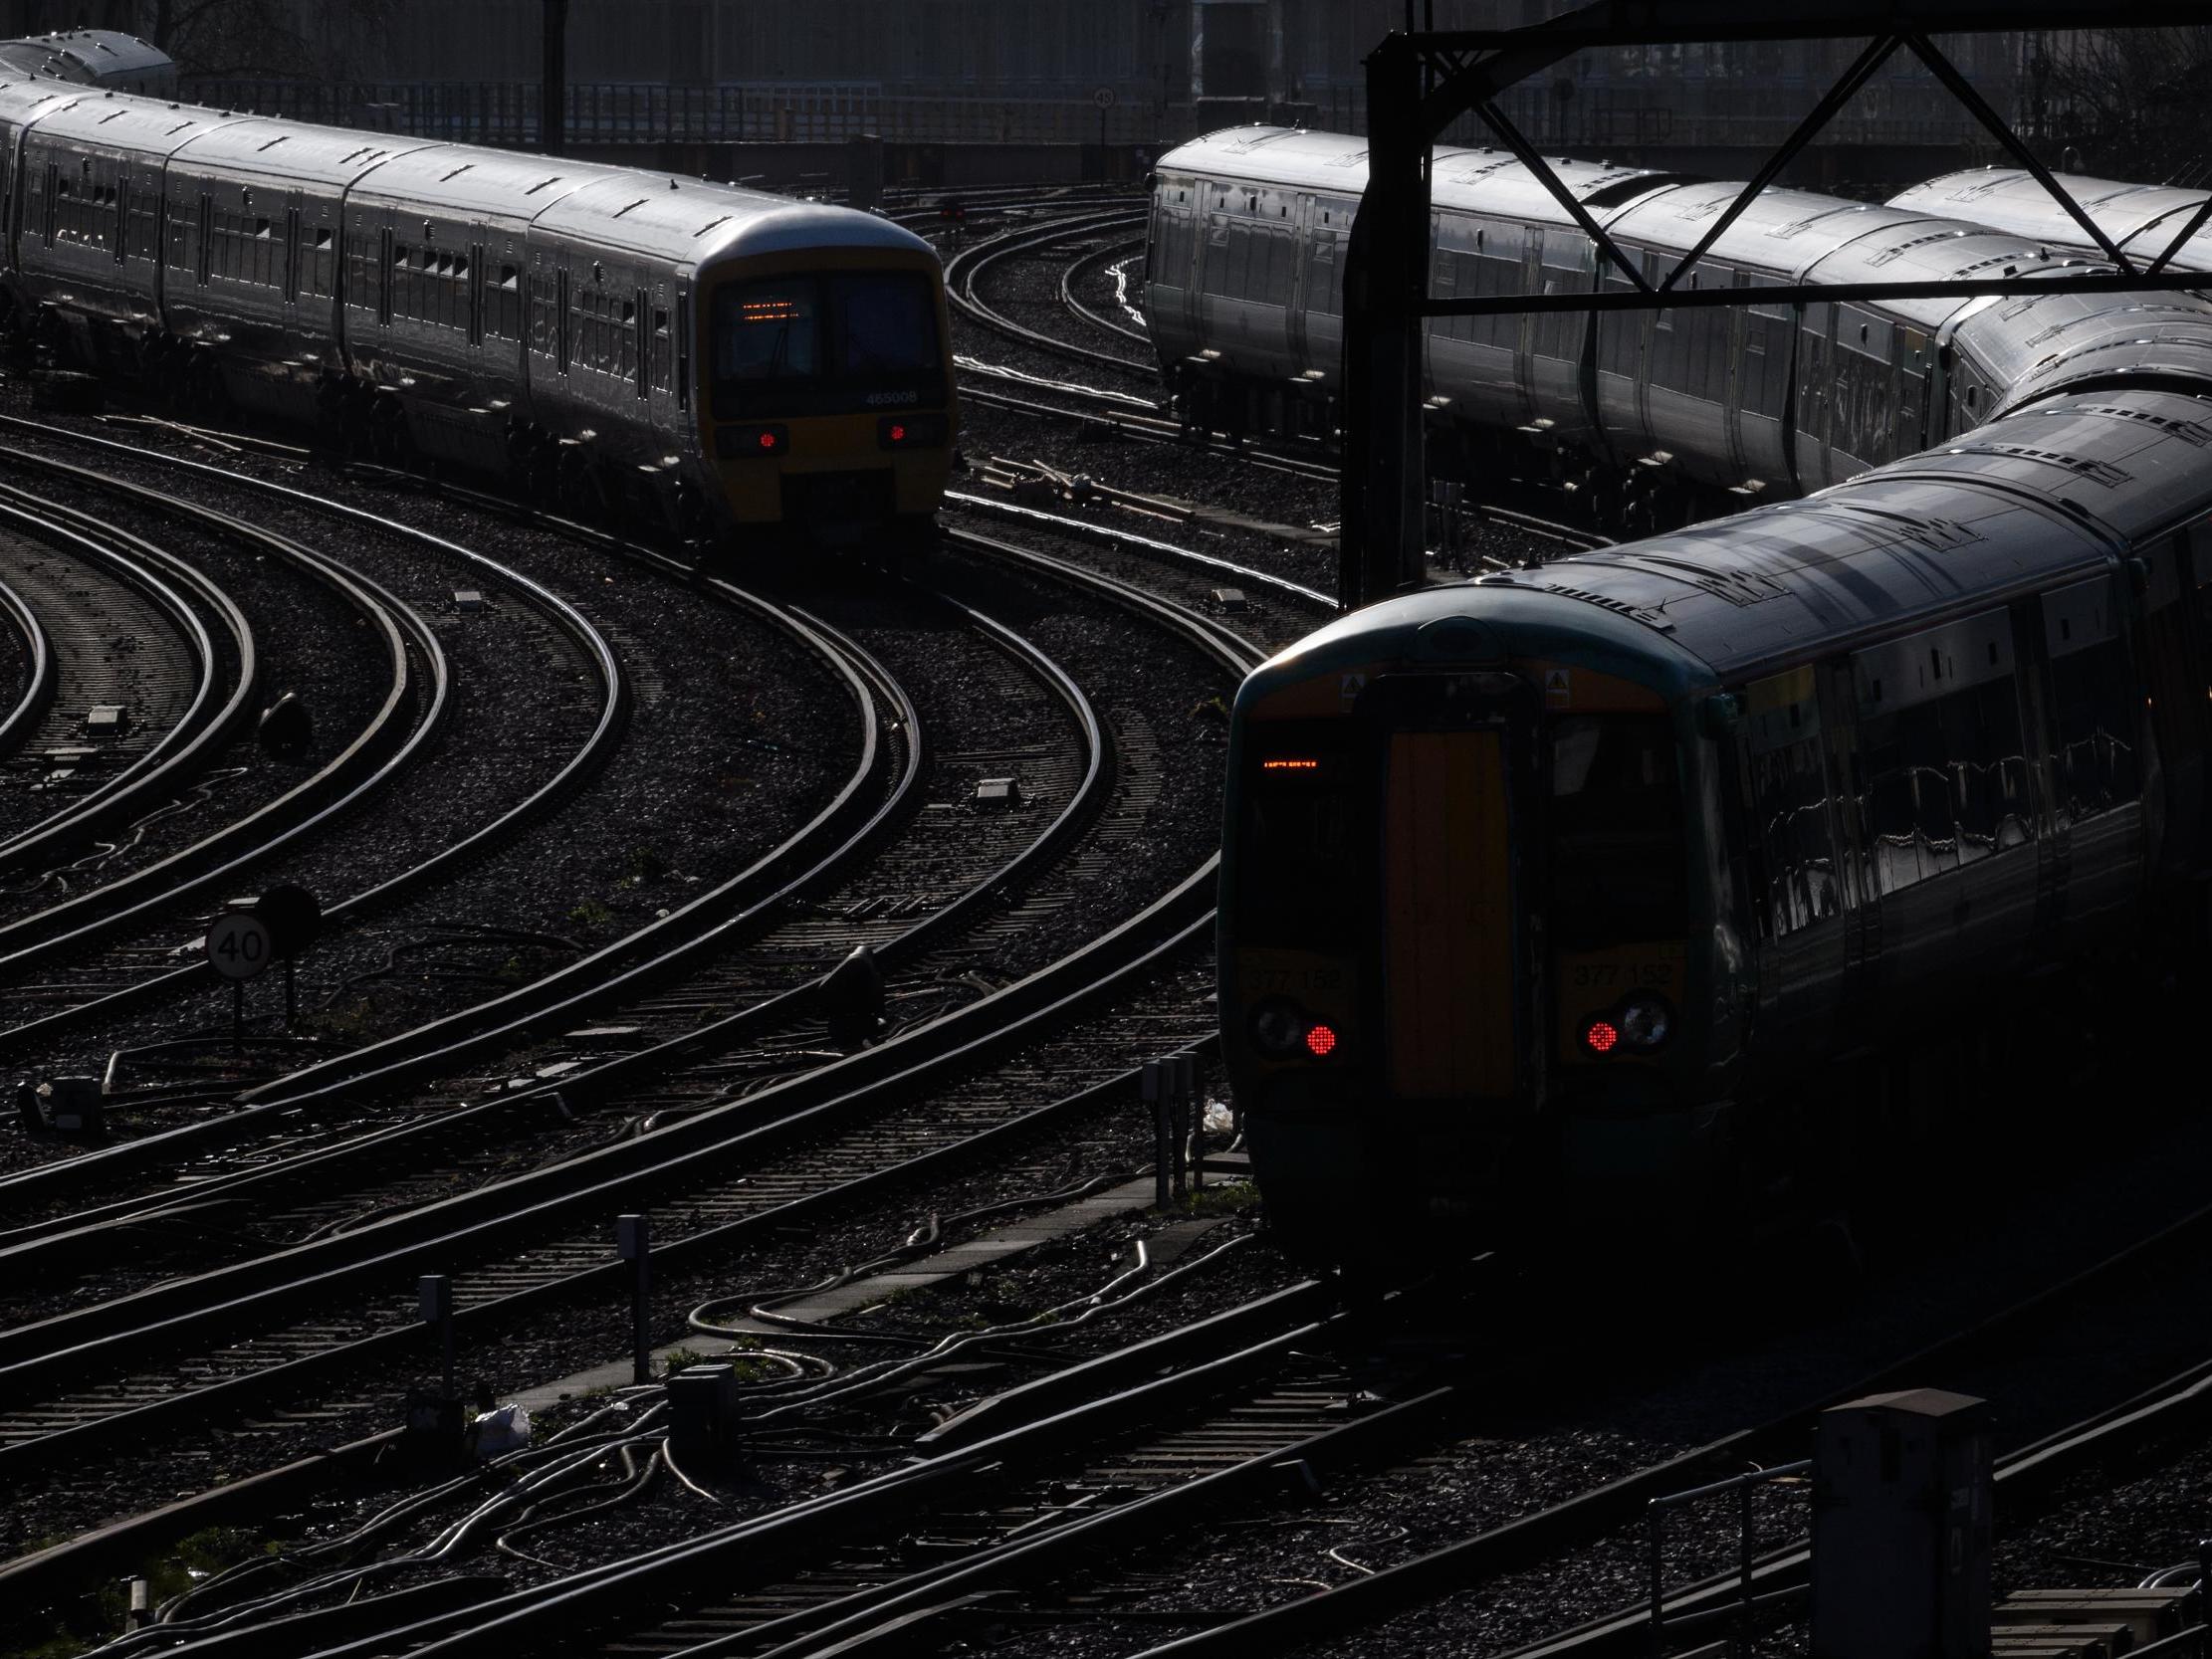 Trains travel on the railway tracks near Victoria Station, London, 16 February 2018